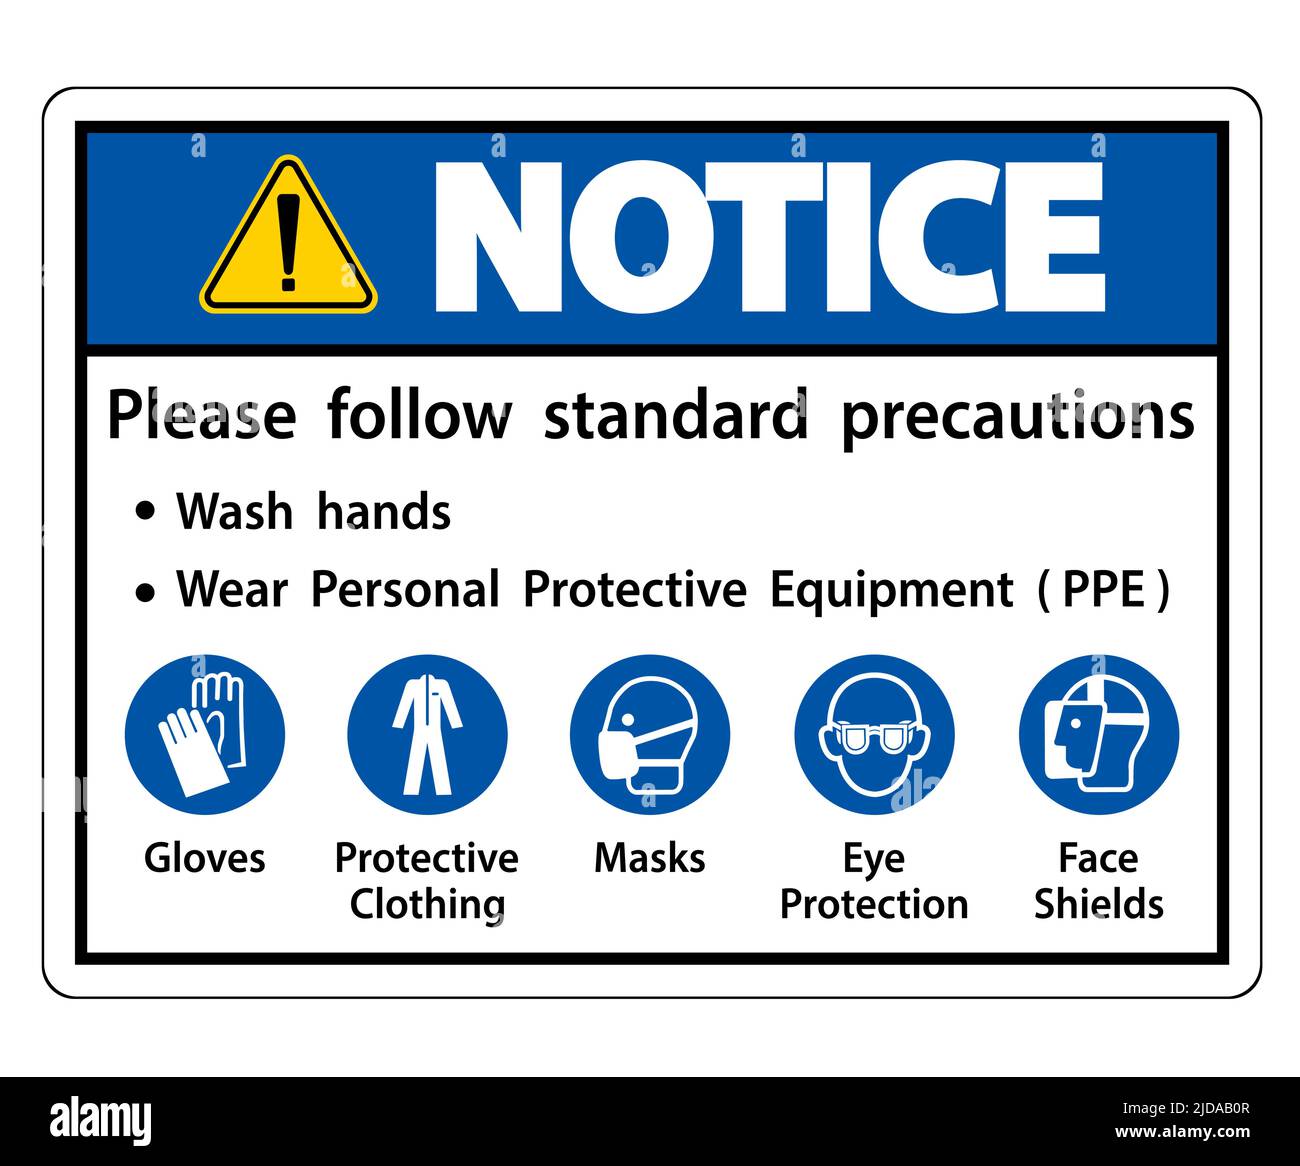 Notice Please follow standard precautions ,Wash hands,Wear